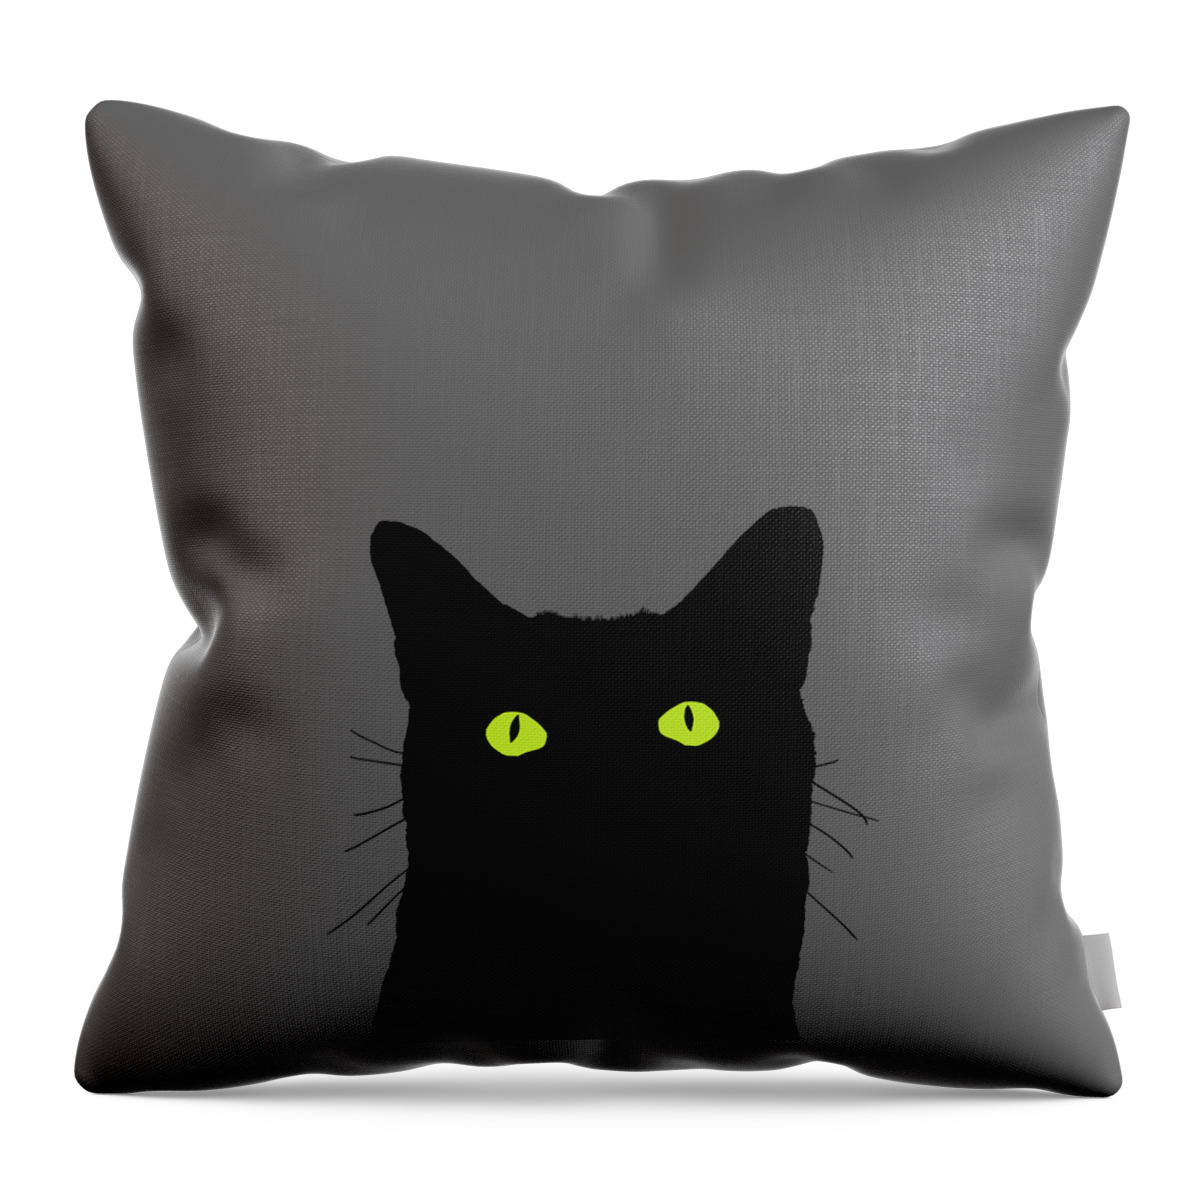 Cat Throw Pillow featuring the digital art Cat Looking Up by Garaga Designs